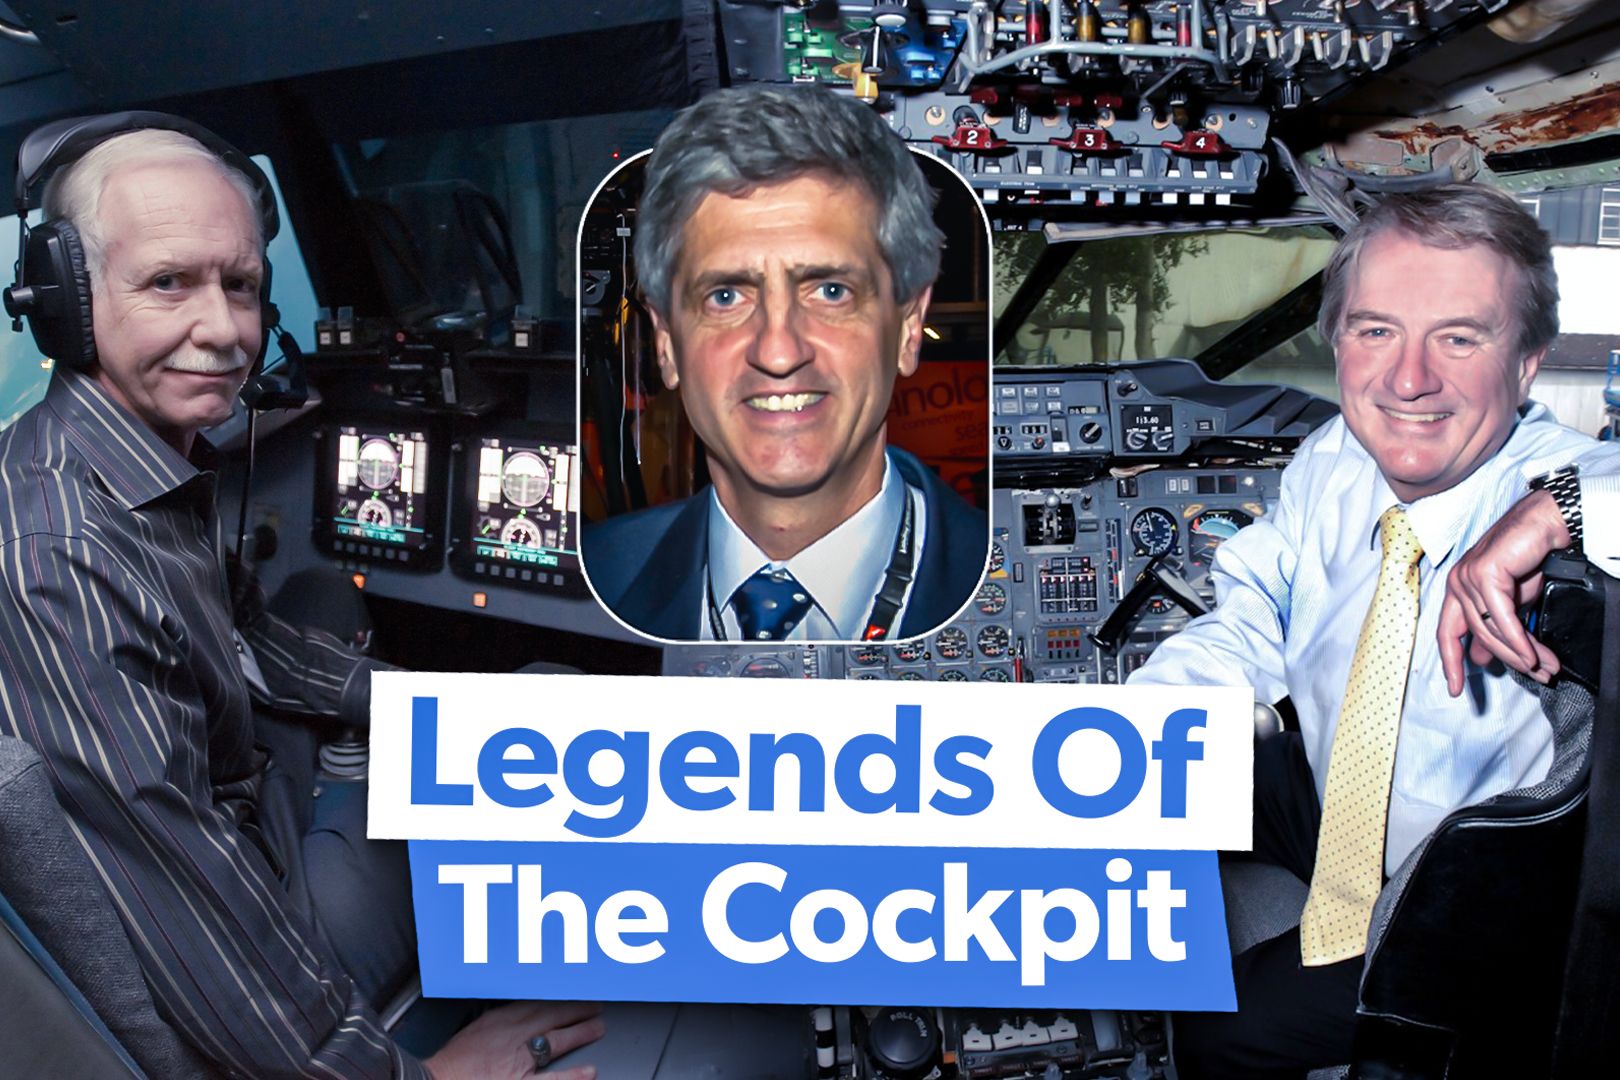 Legends of the cockpit